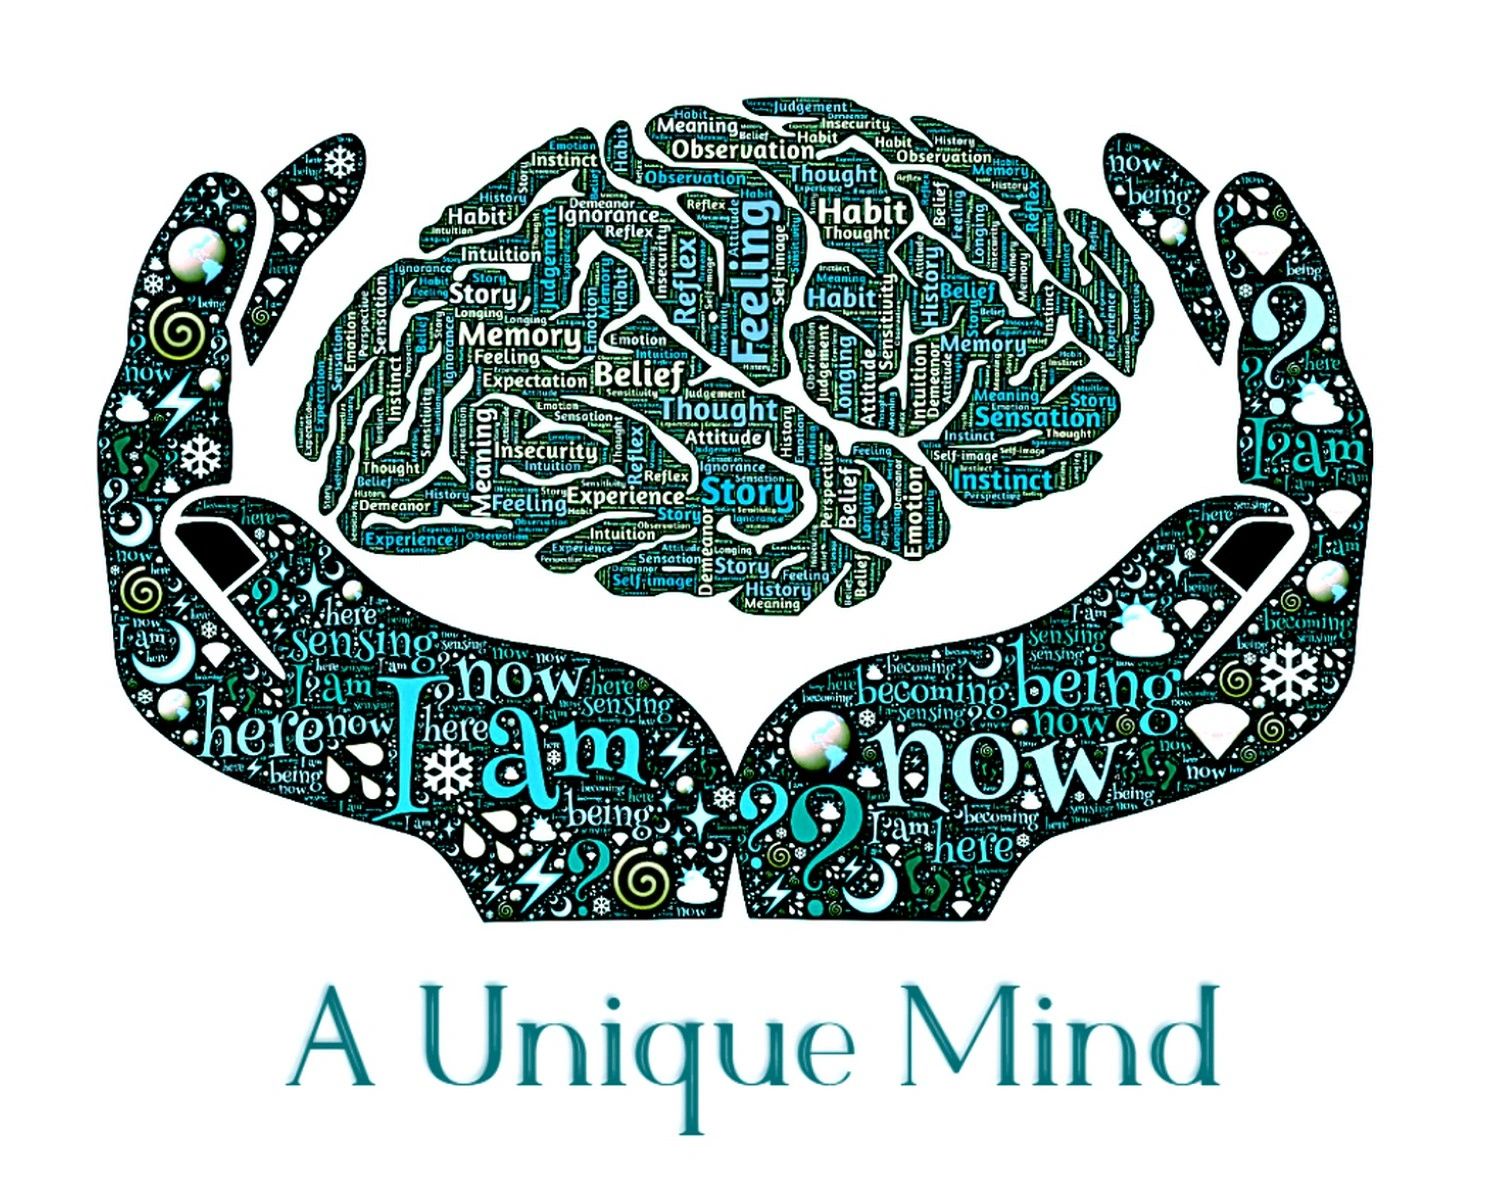 Unique things. The singular Mind книга. Singular Mind.